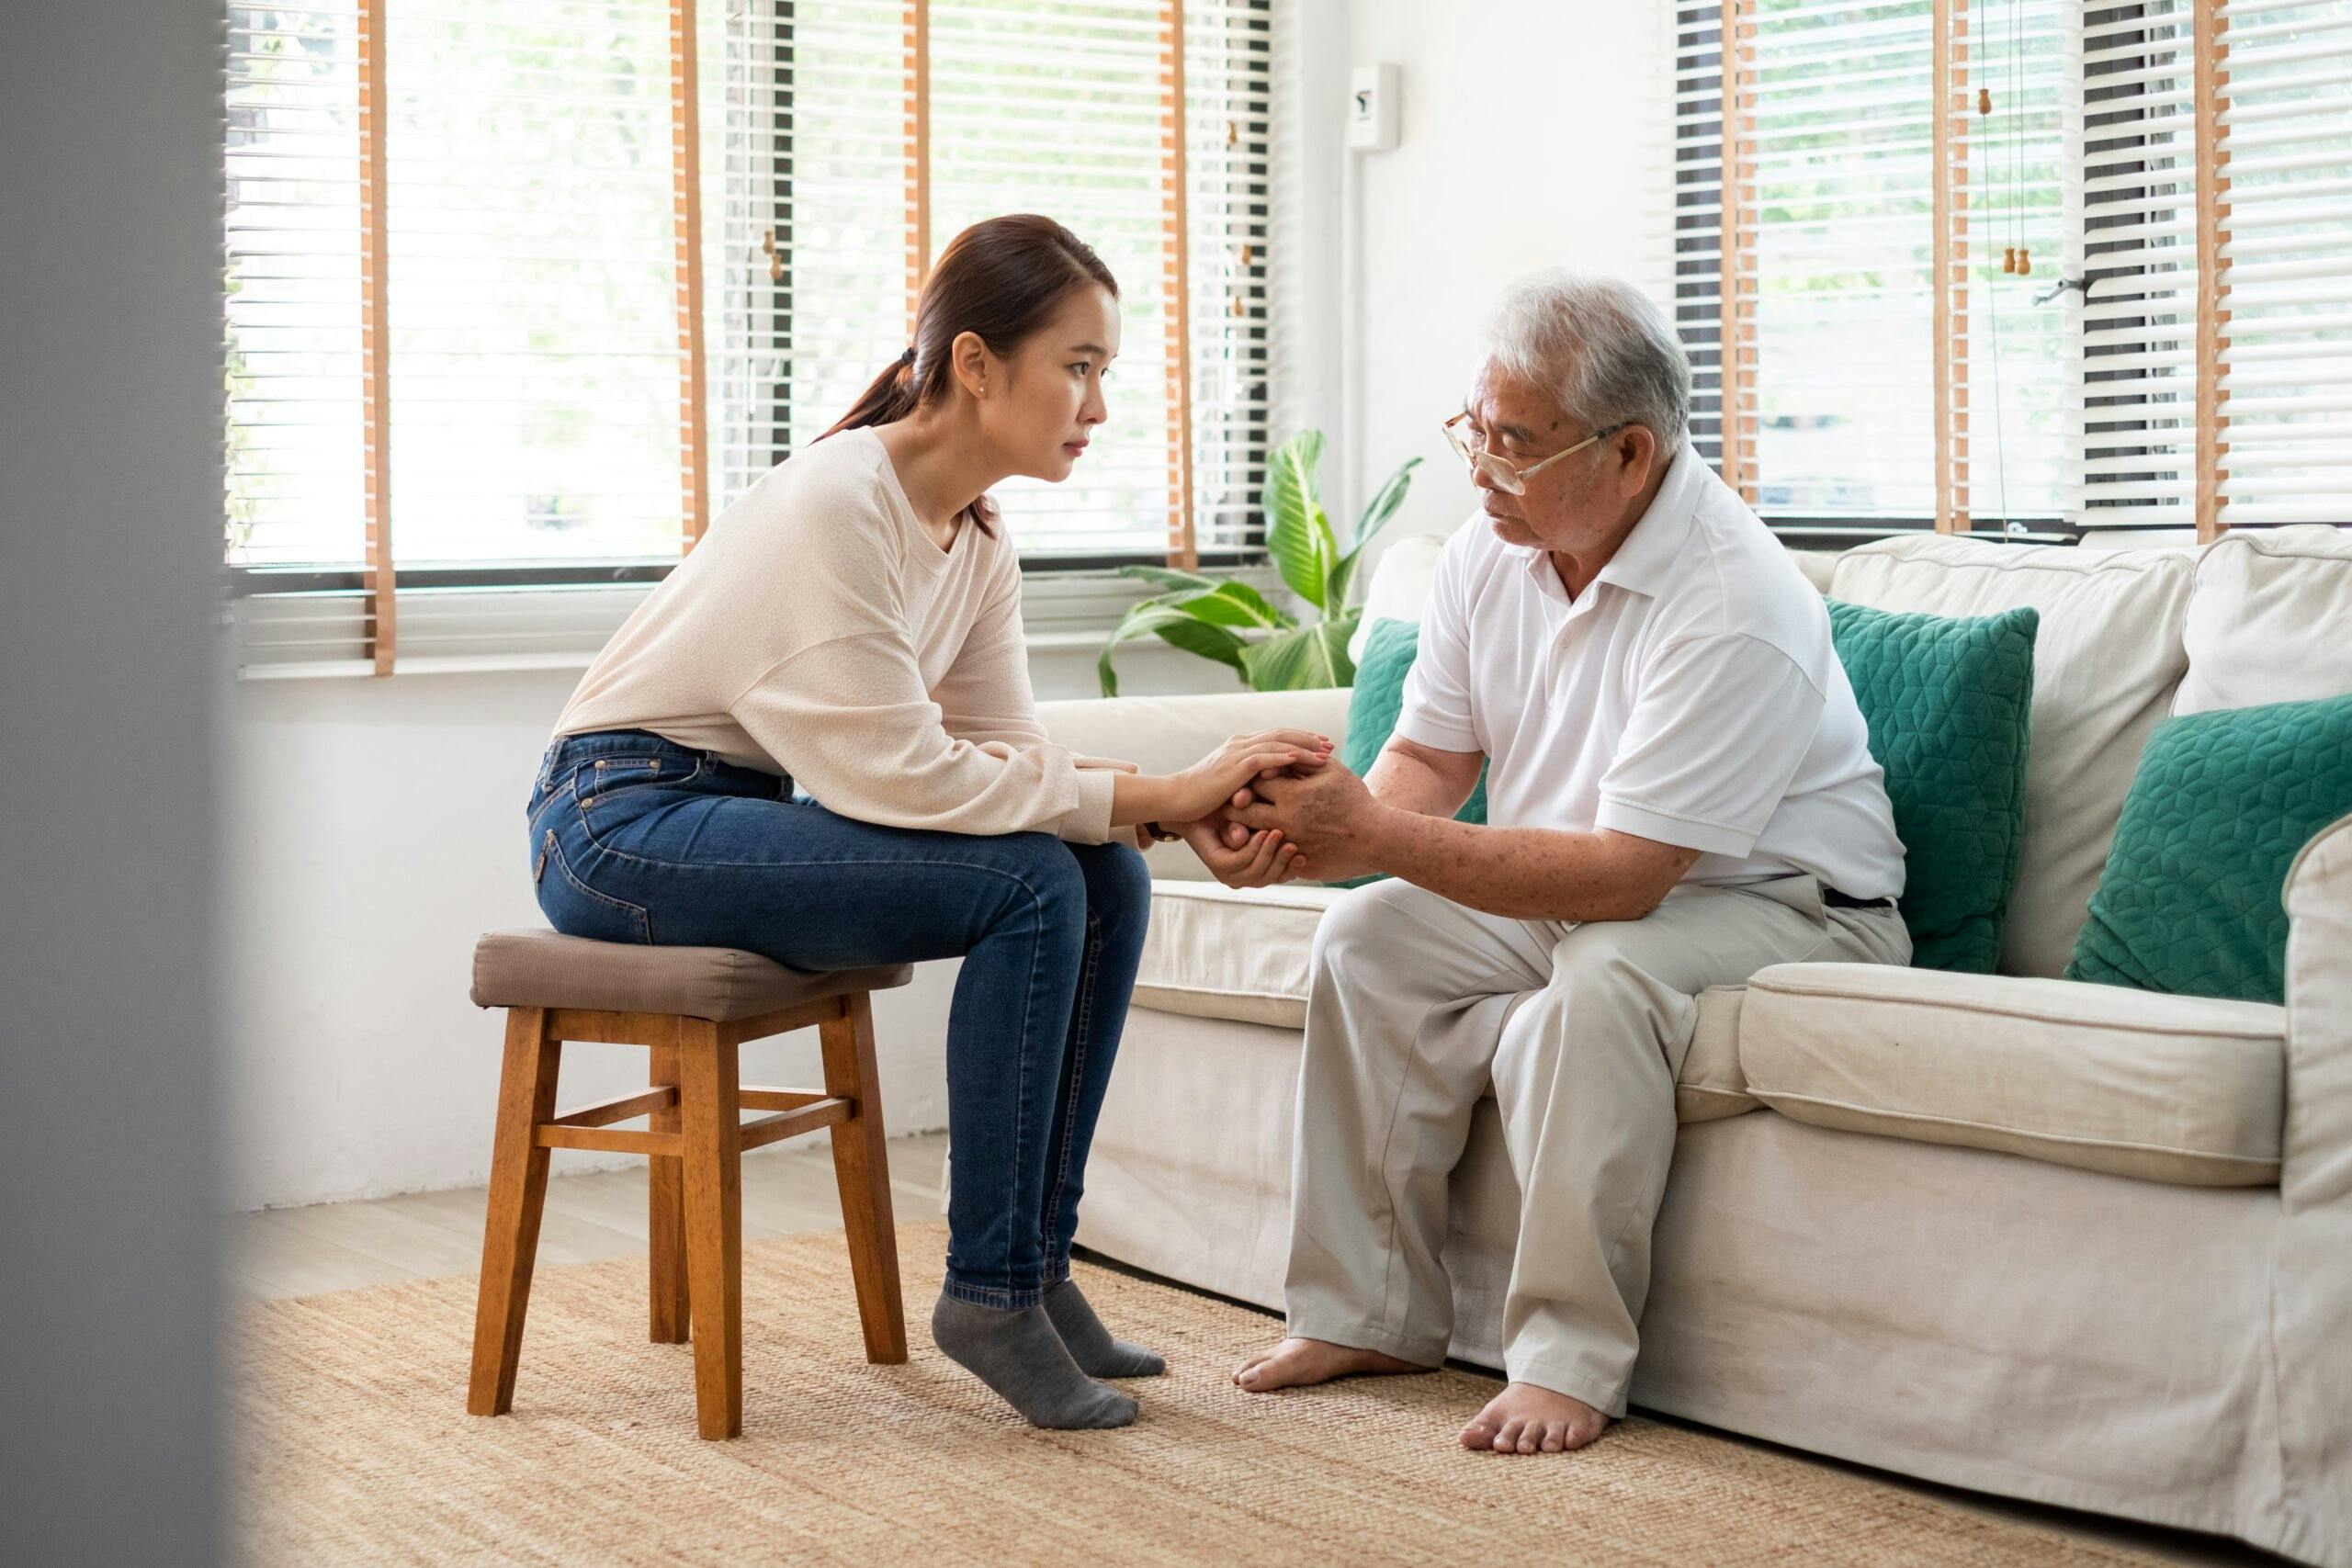 7 Food Preparation Tips for Caregivers and Elders - Caregiver Support  Services